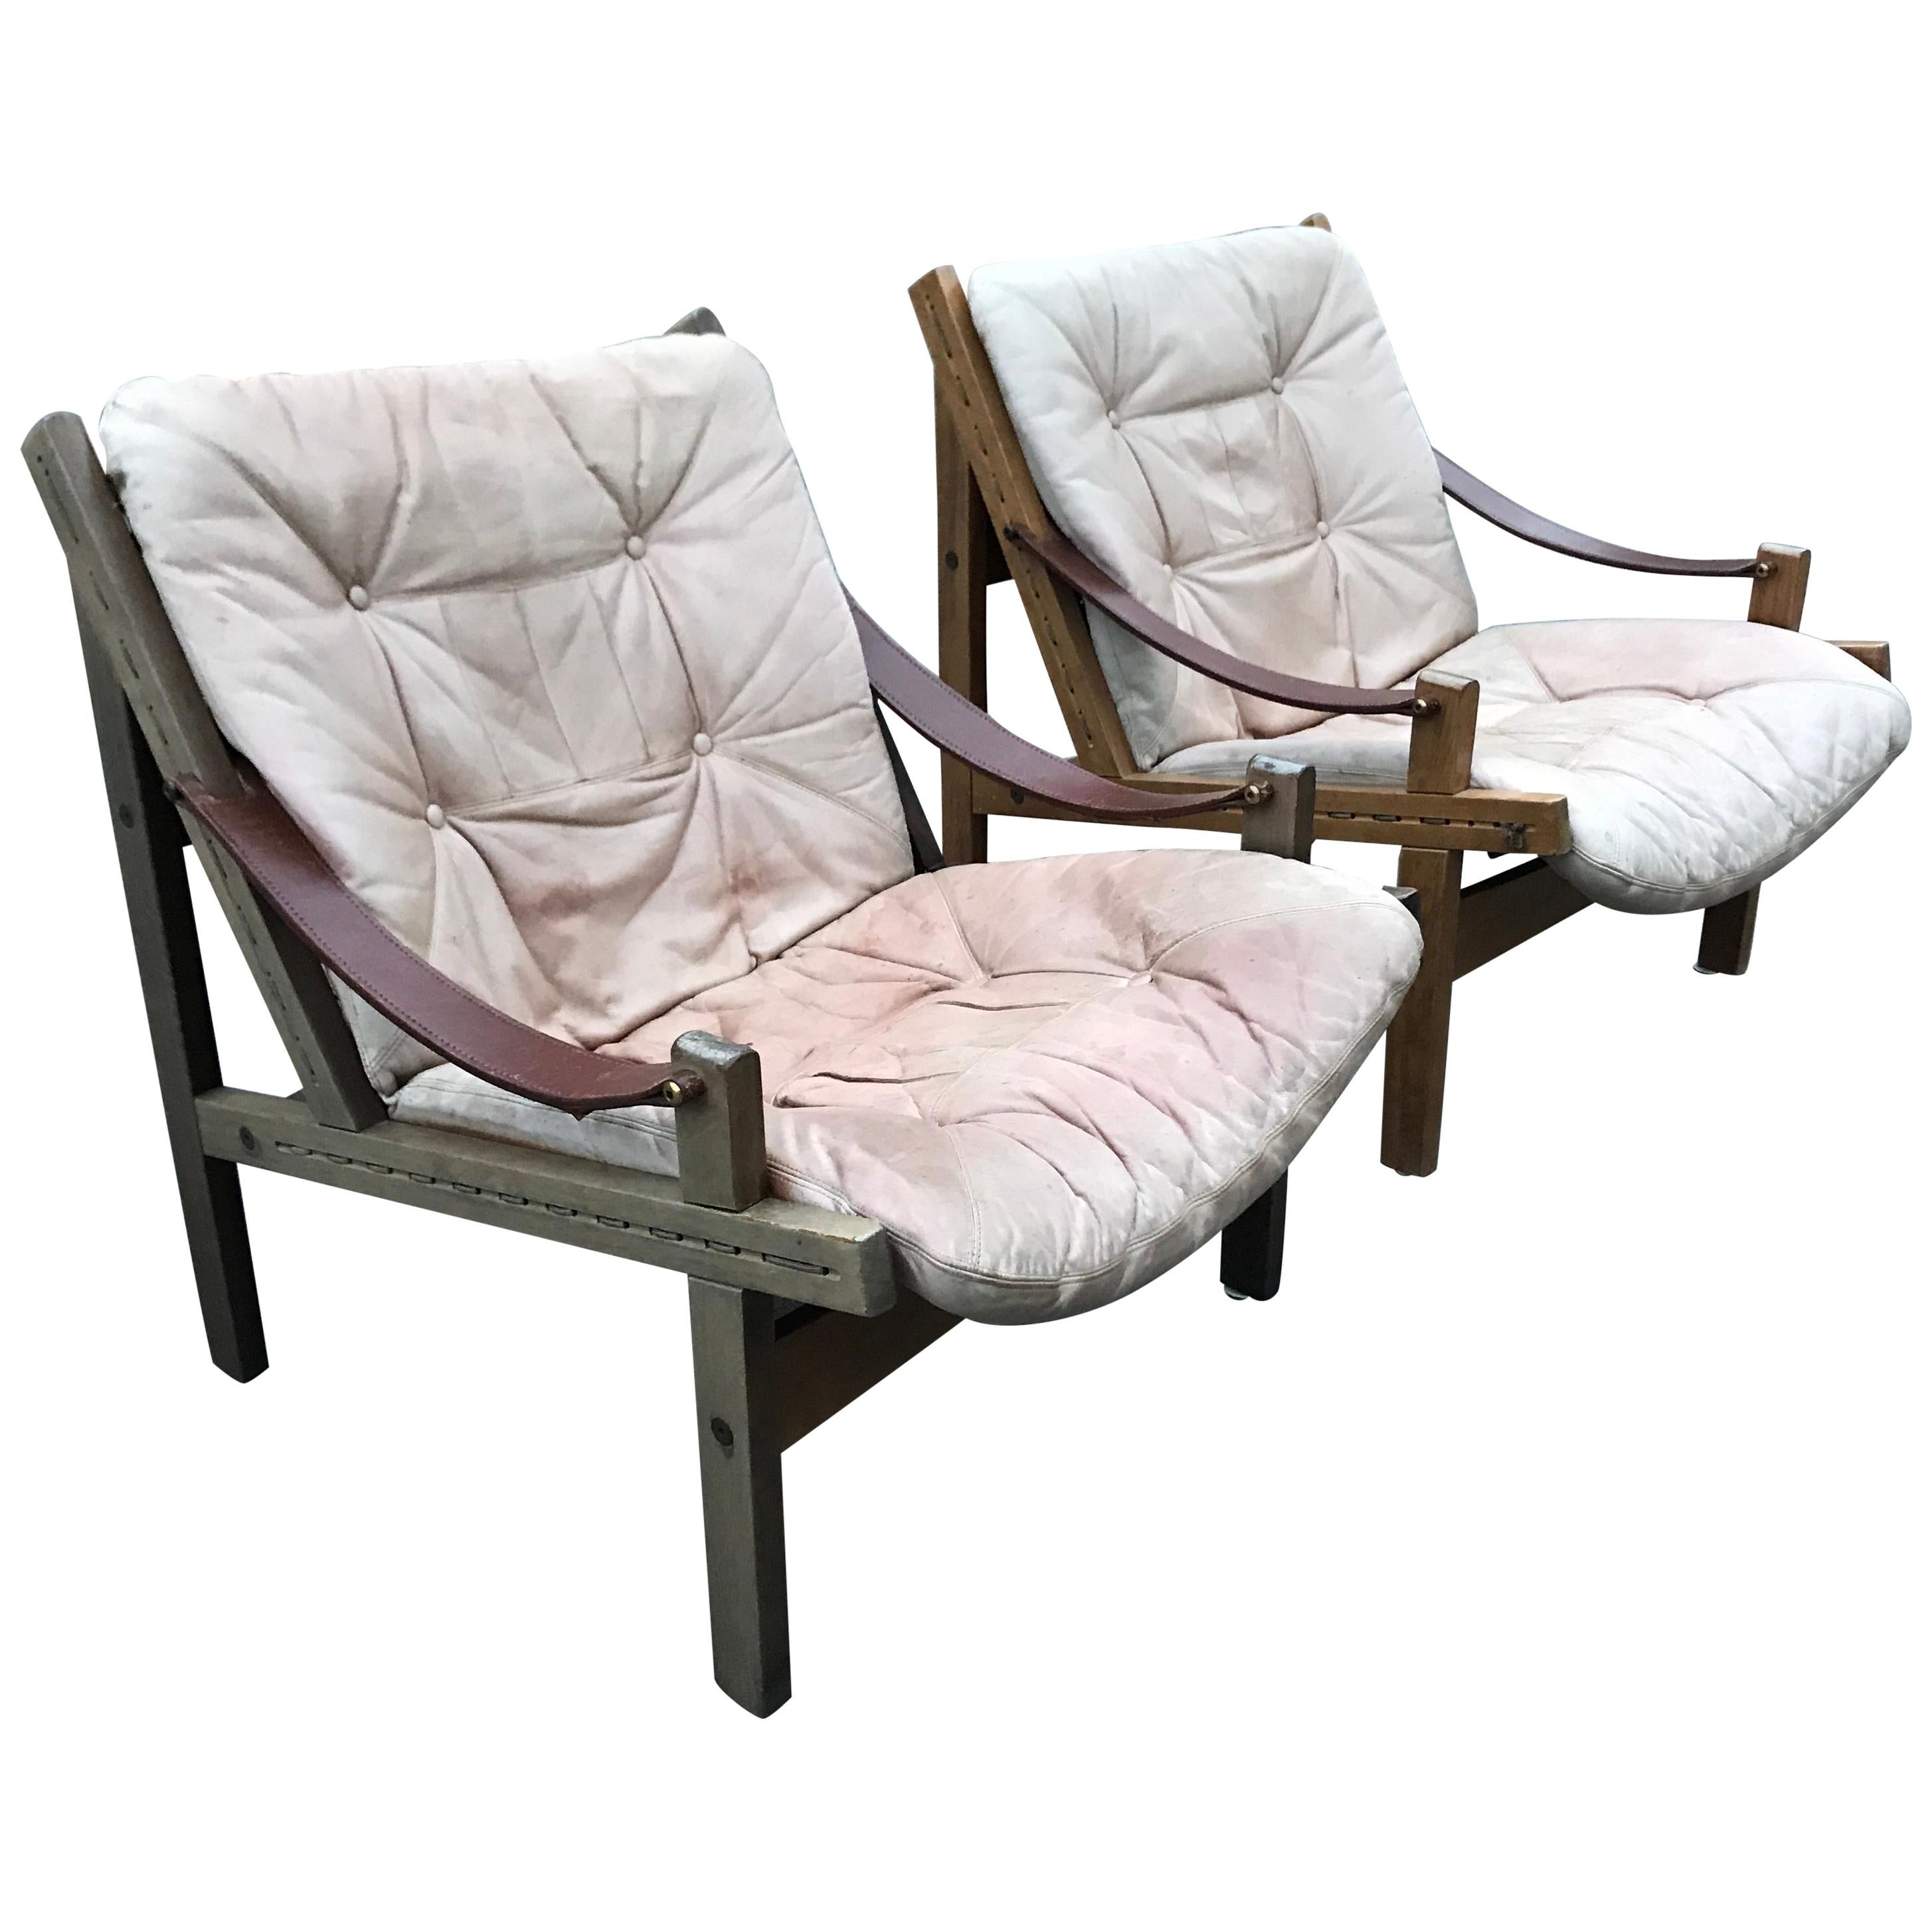 Pair of "Hunter Chairs" by Torbjørn Afdal, Norwegian Mid-Century Modern